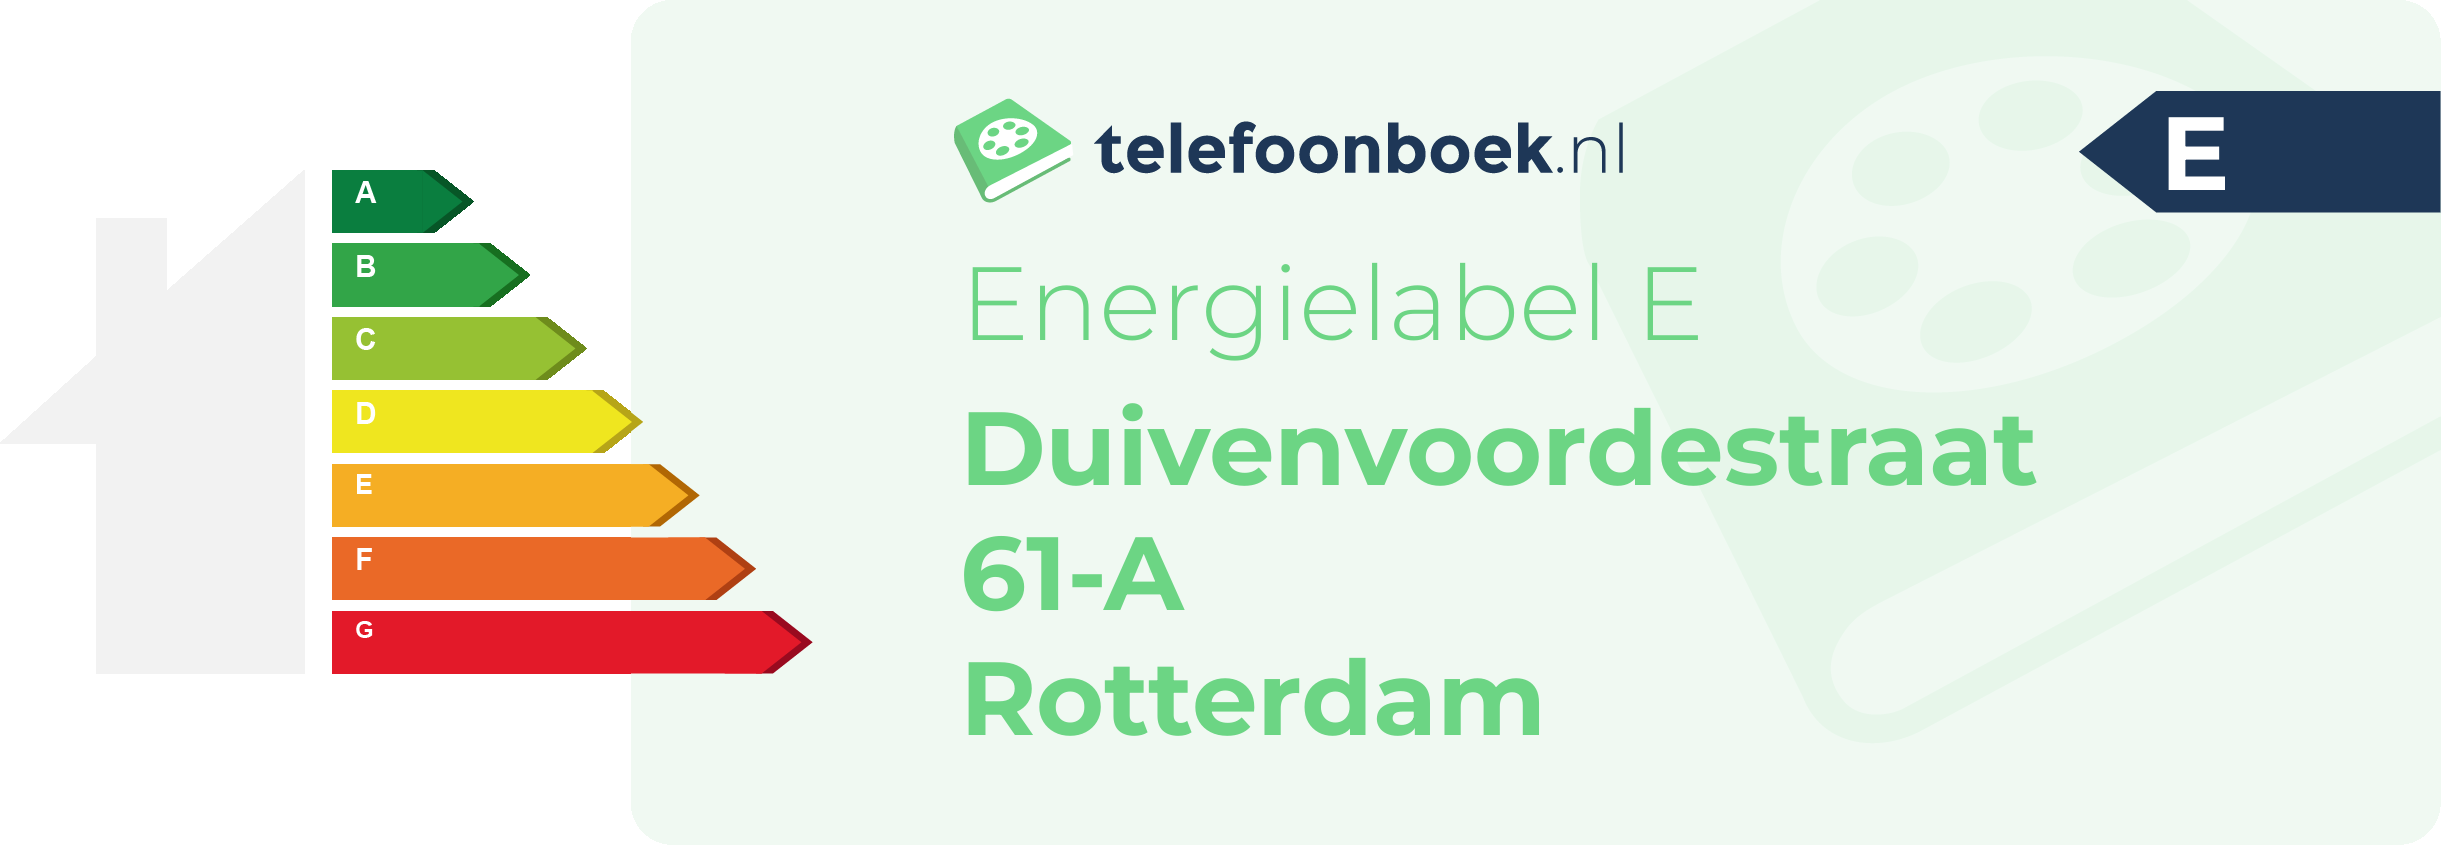 Energielabel Duivenvoordestraat 61-A Rotterdam